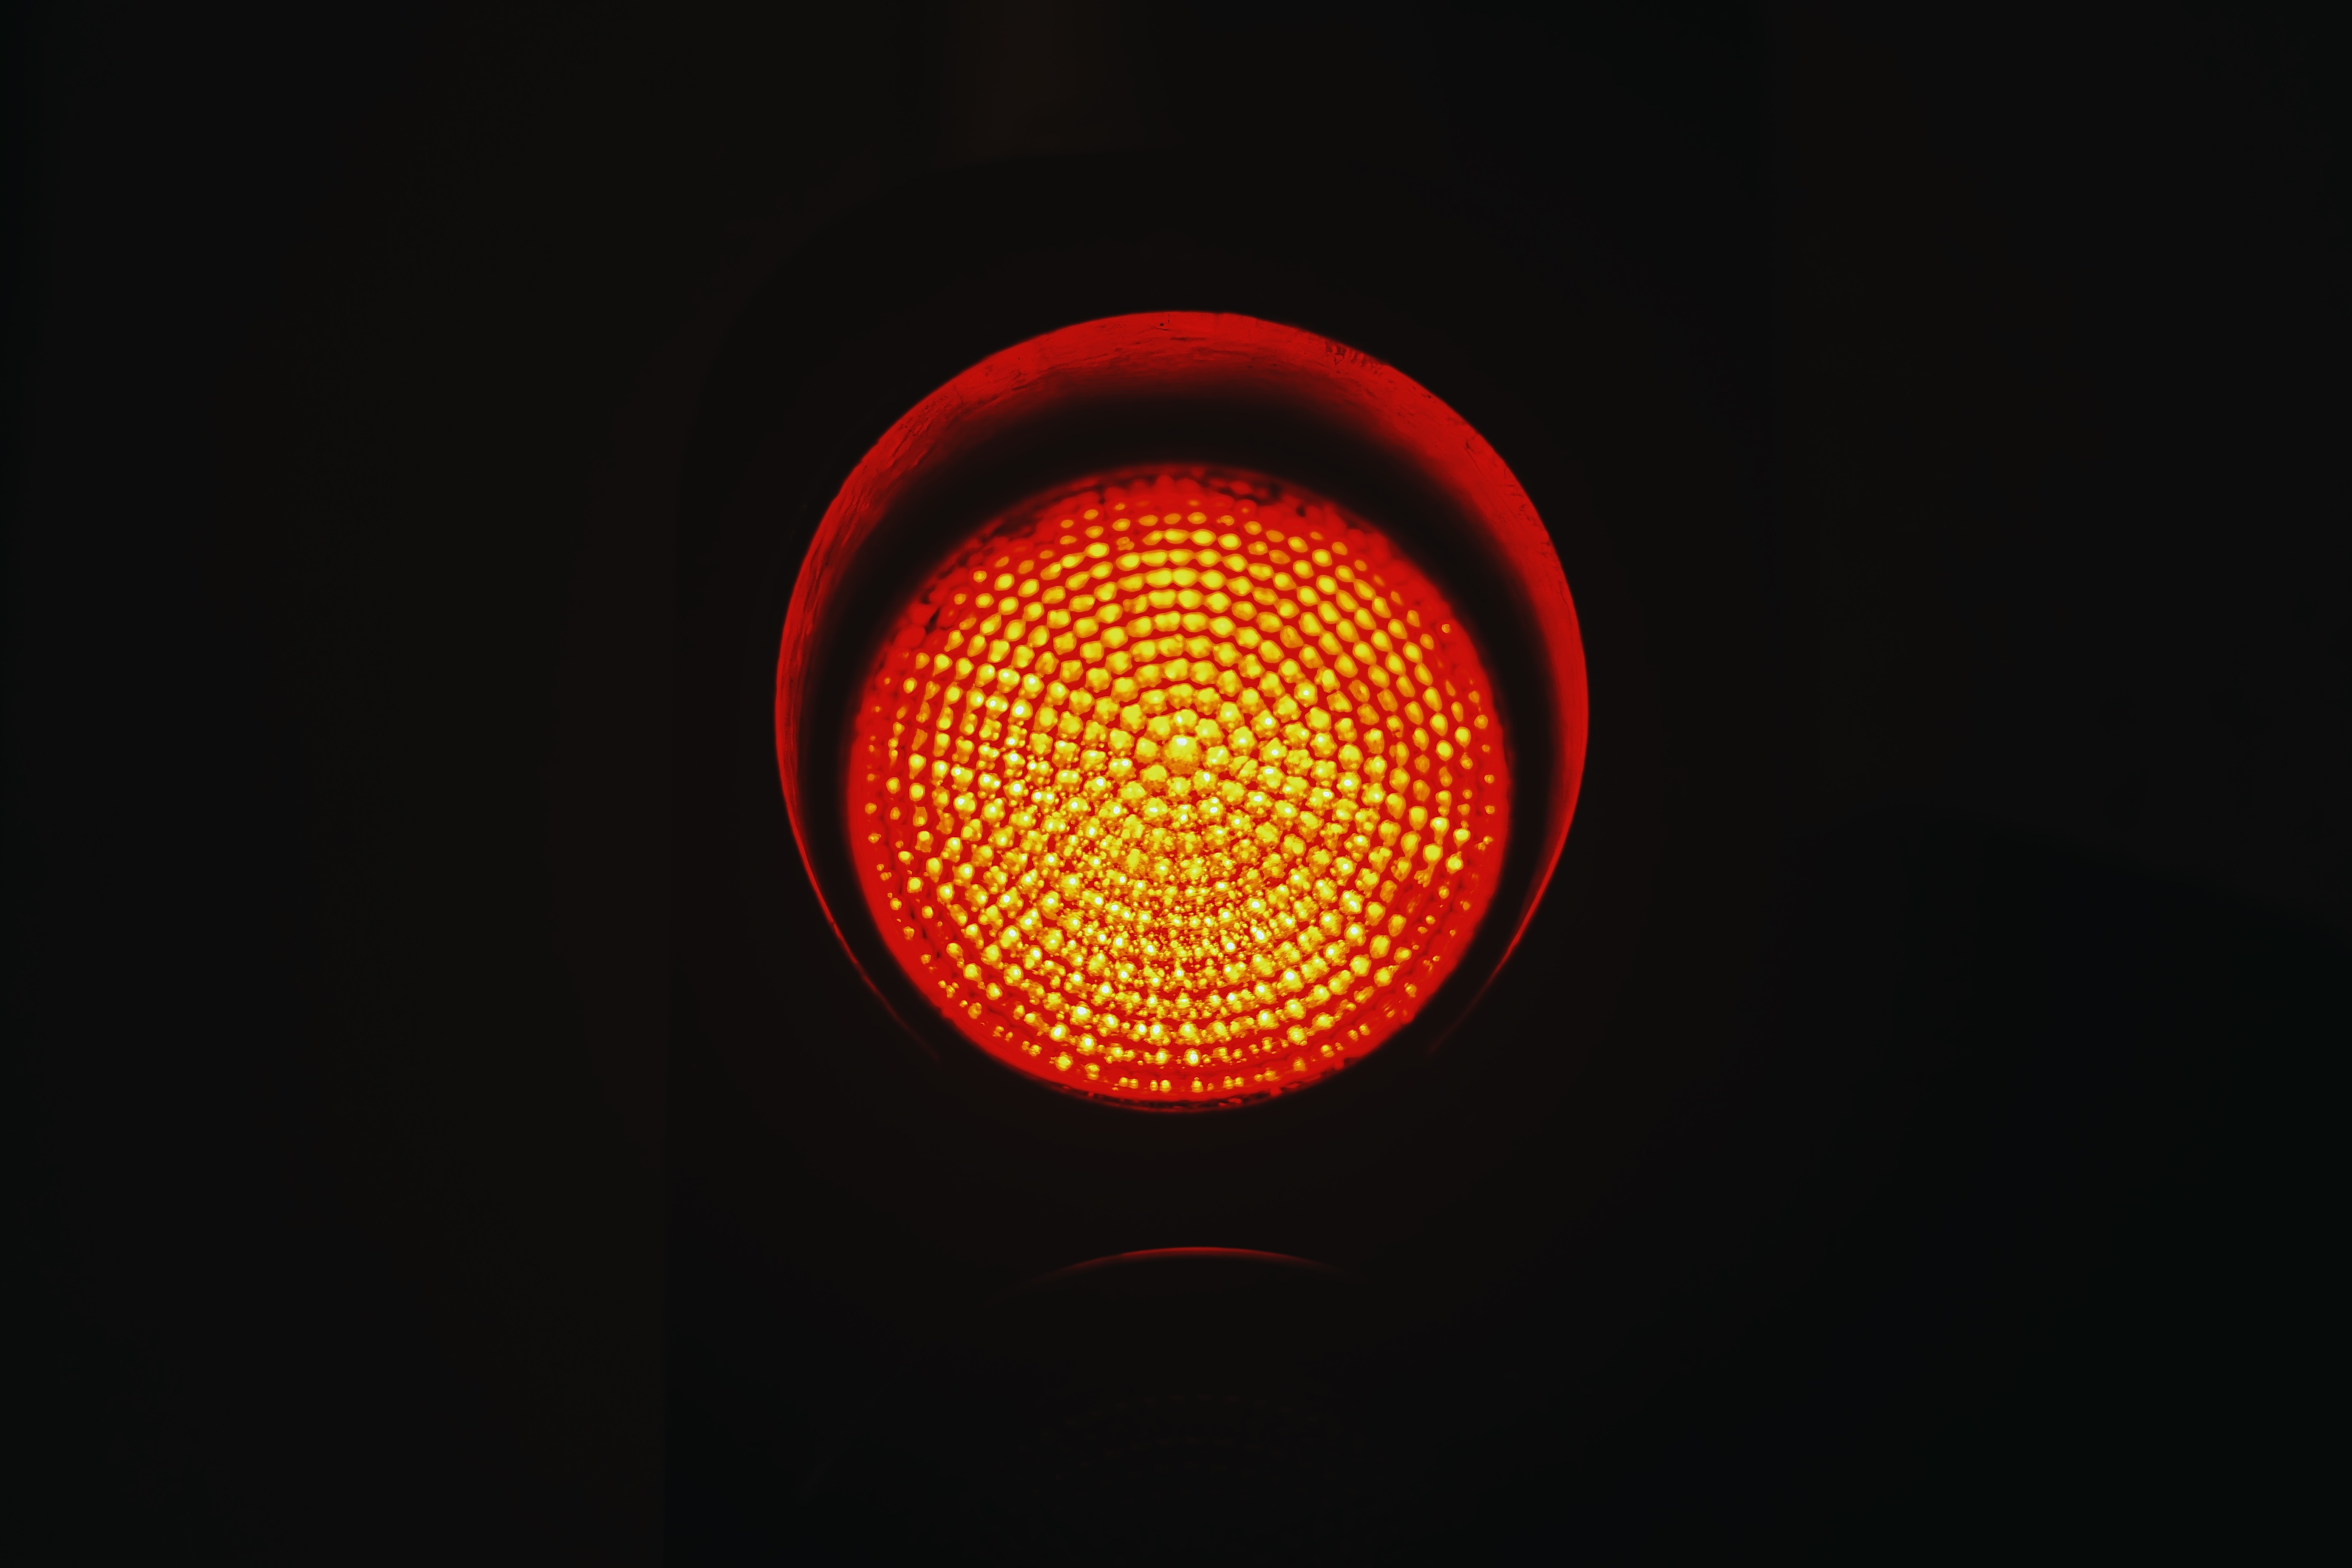 Traffic light red. Красный светофор. Красный свет светофора. Красный йвет световофра. Красный сигнал.